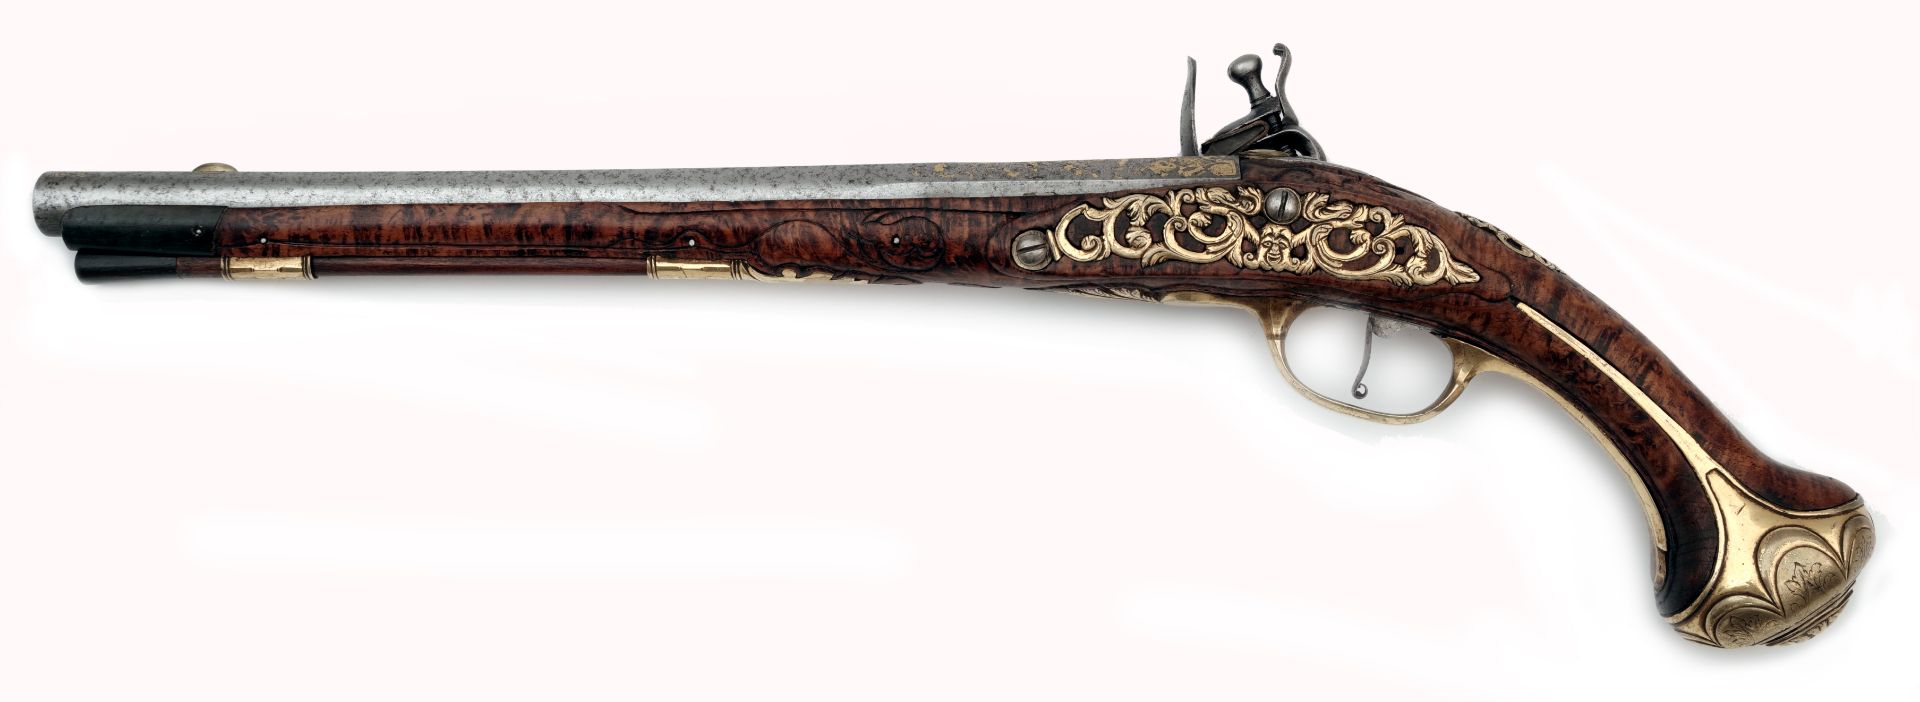 A Long Flintlock Pistol by Joseph Hamerl - Image 6 of 8